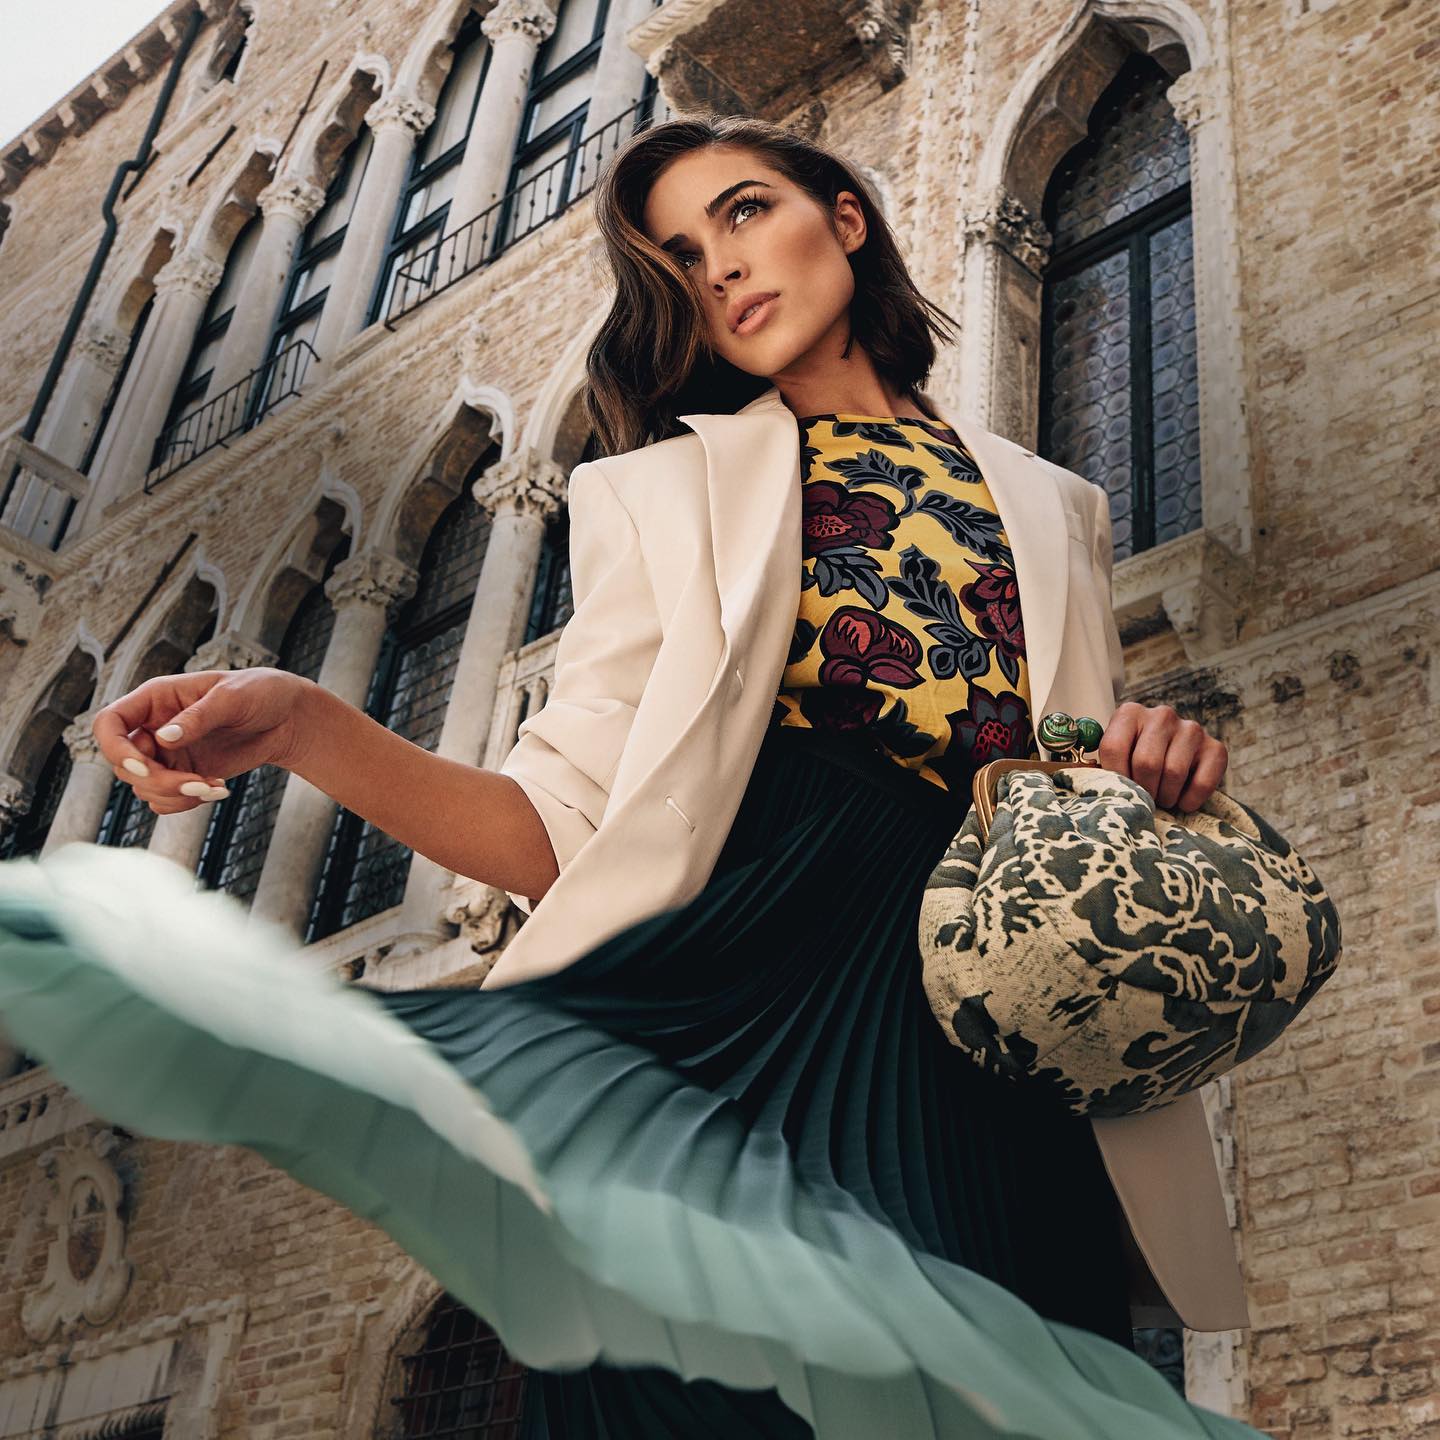 Olivia Frances Culpo Photoshoot for Grazia Italia Magazine, Aug 2022 4